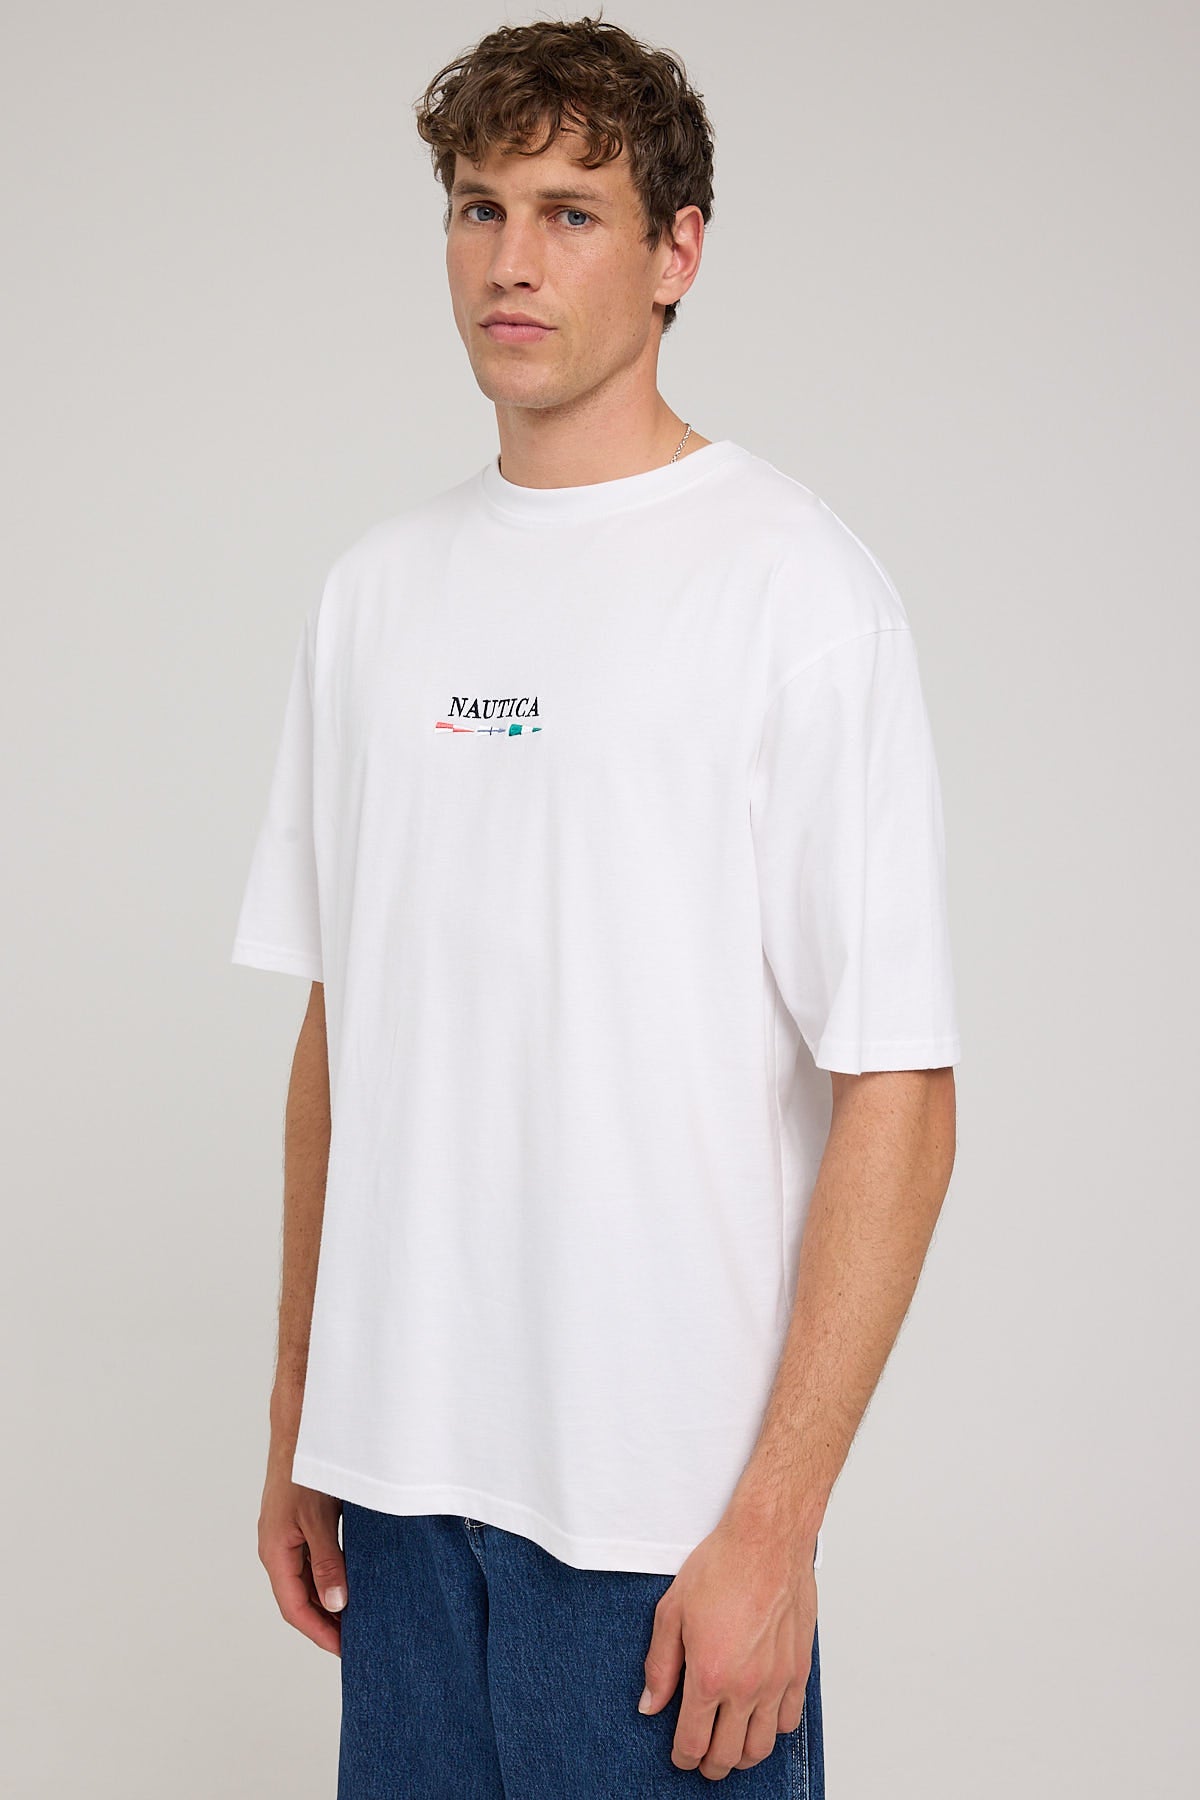 Nautica Emporum T-Shirt White